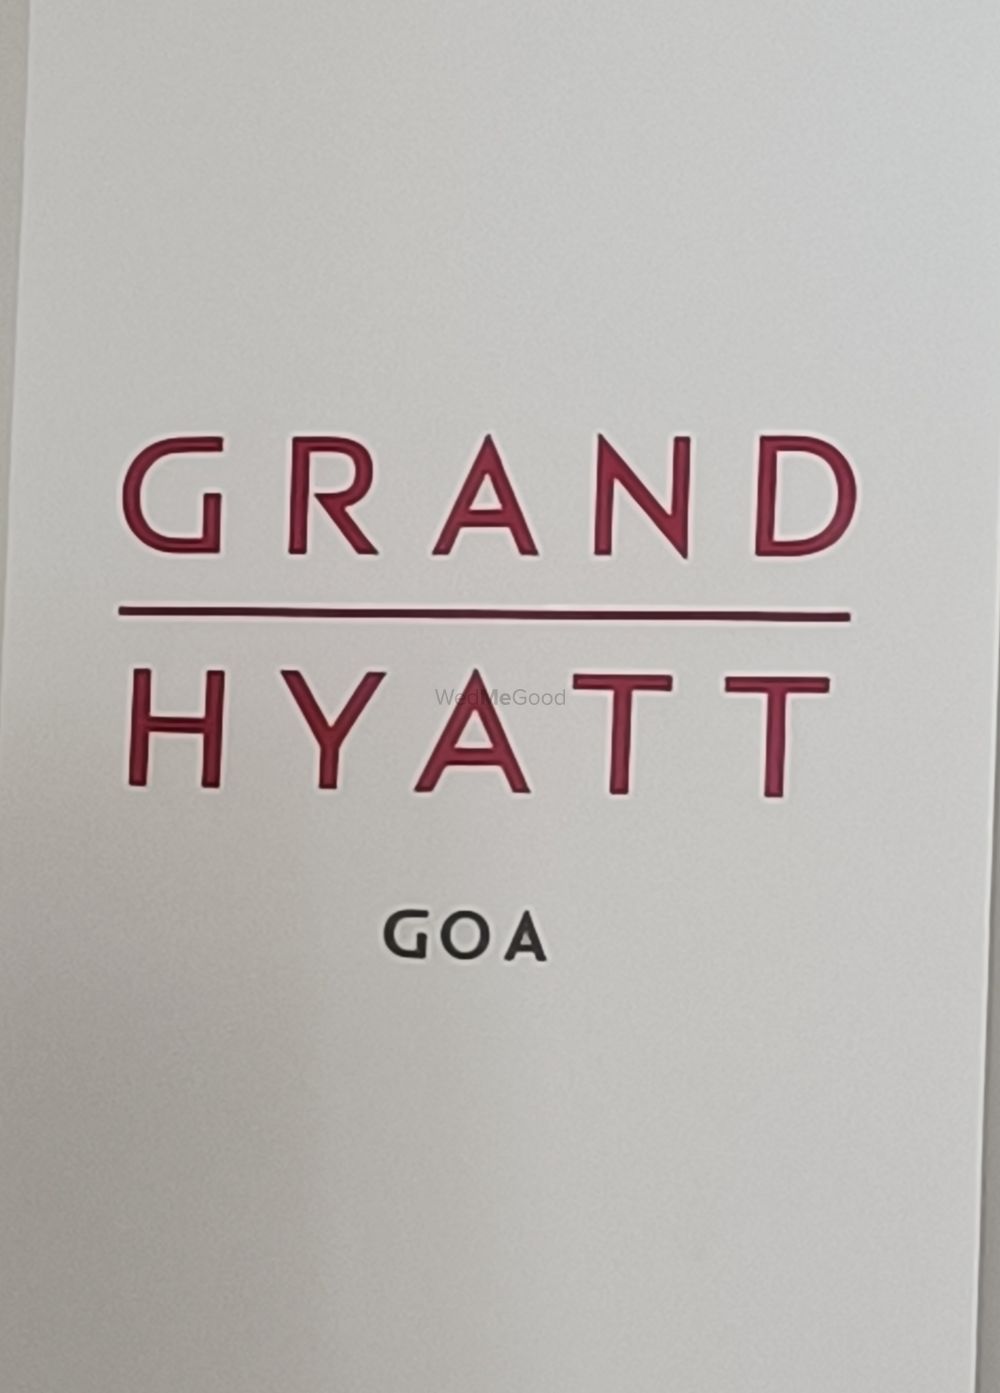 Photo From Hosting Antakshari @Grand Hyatt Goa - By Jonaf Chinnaya